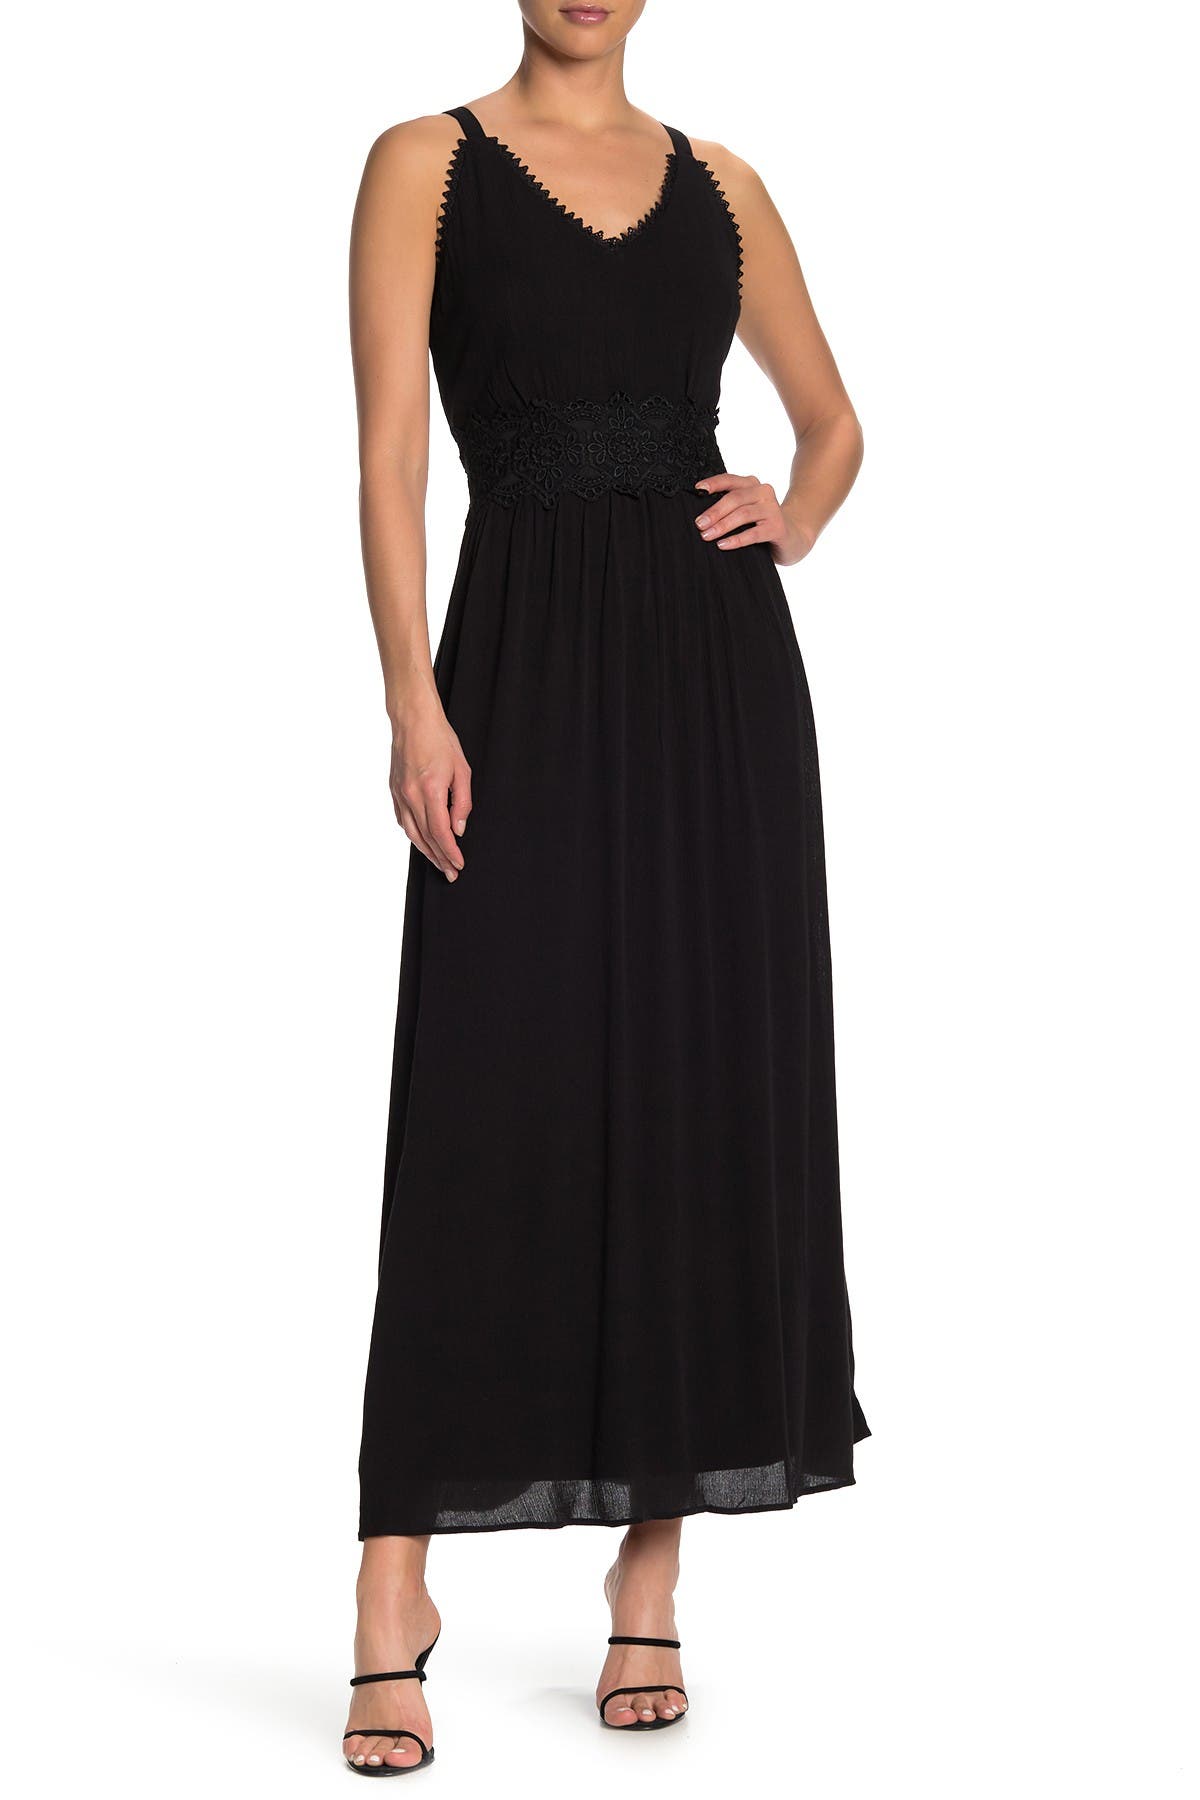 lace black flowy dress,casual black sleeveless dress,black maxi dress,long black dress,